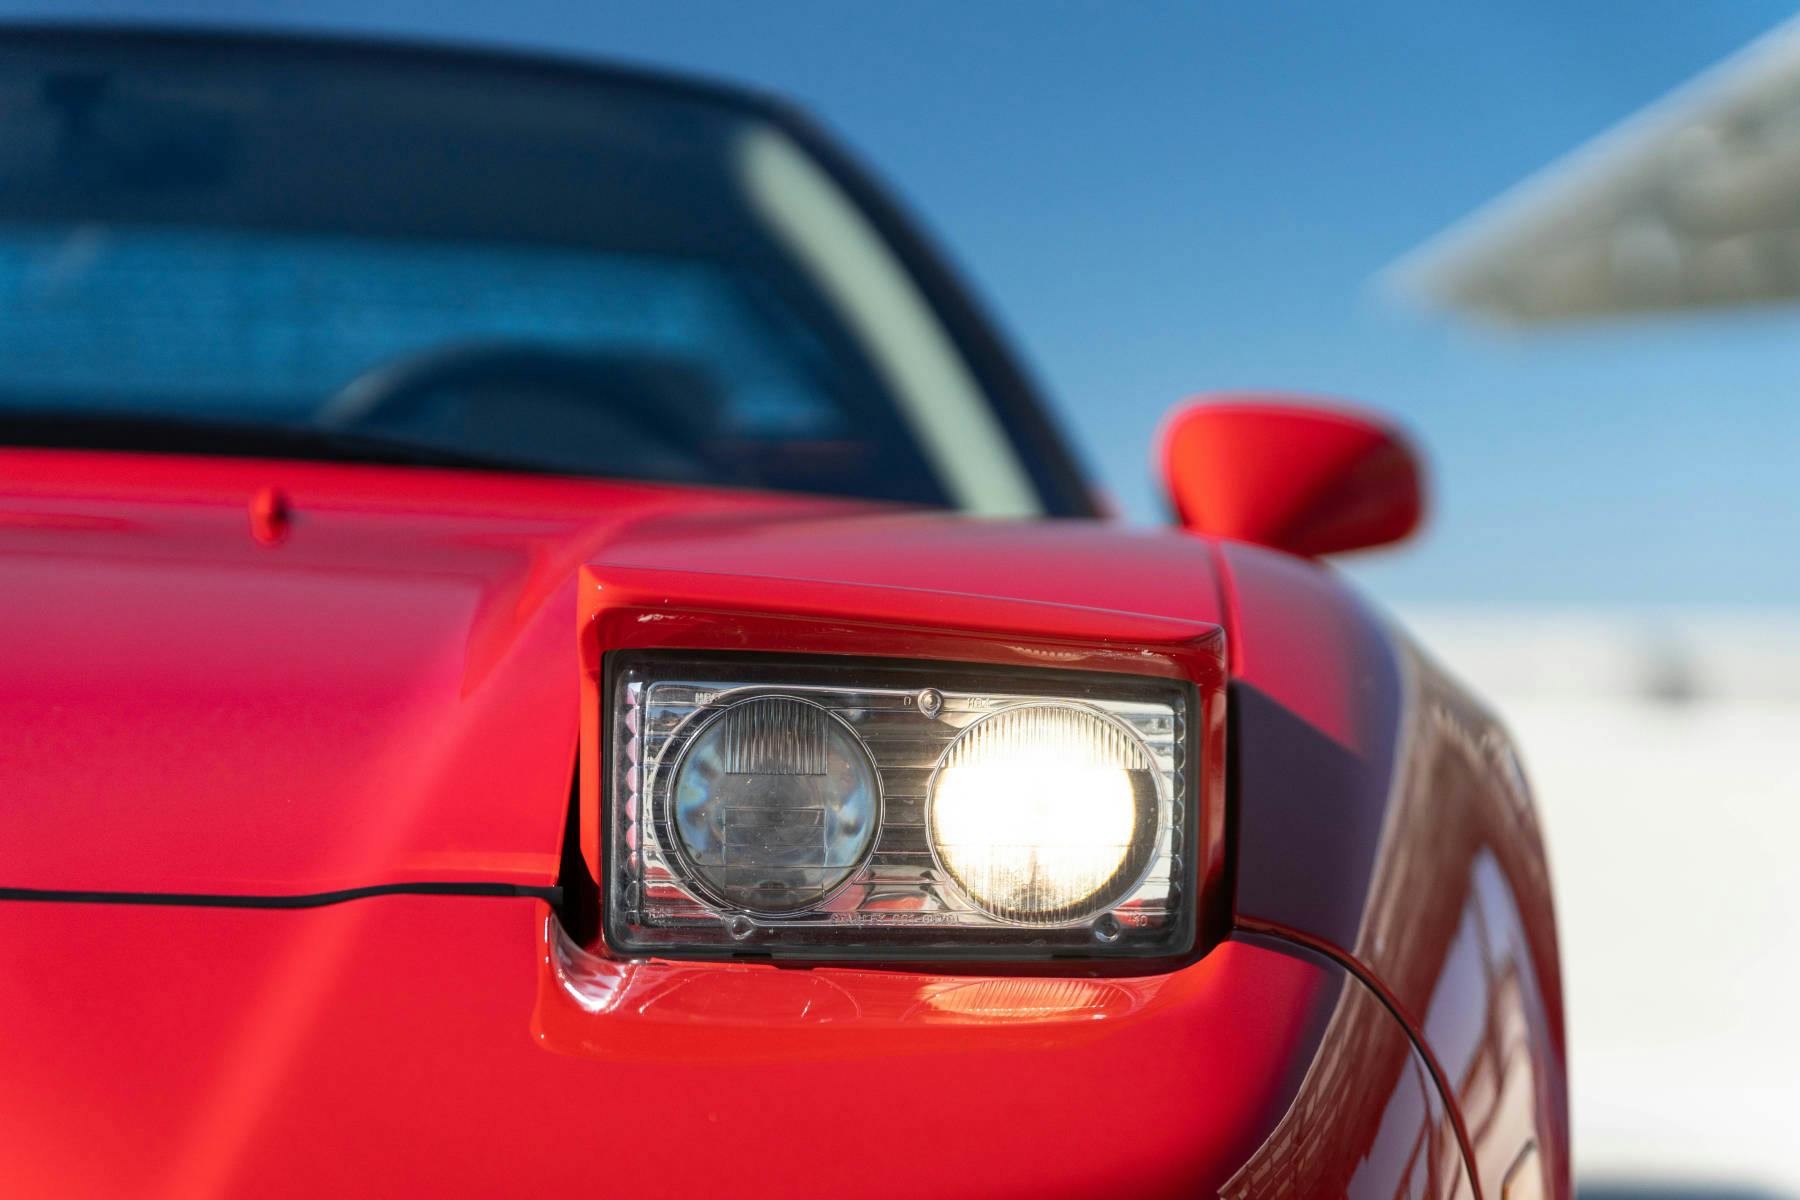 1991 Acura NSX red pop up headlight